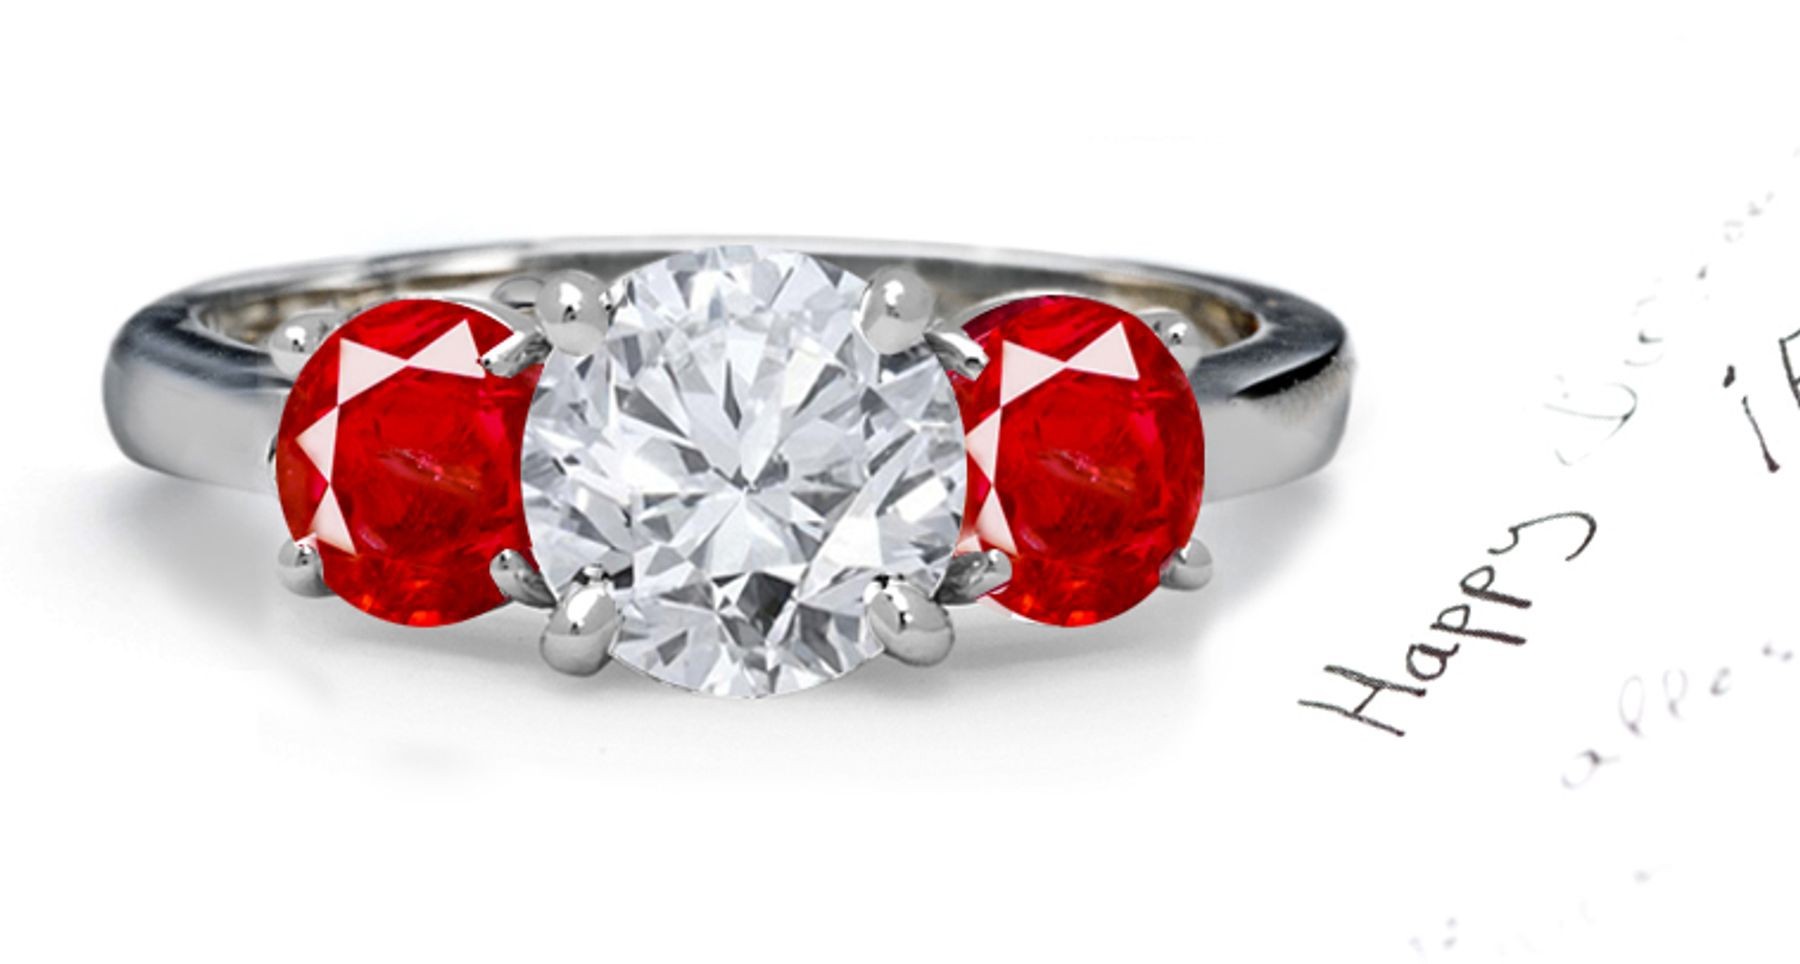 Enchanting:Most Stunning Ruby & Sparkling Diamond Engagement Ring